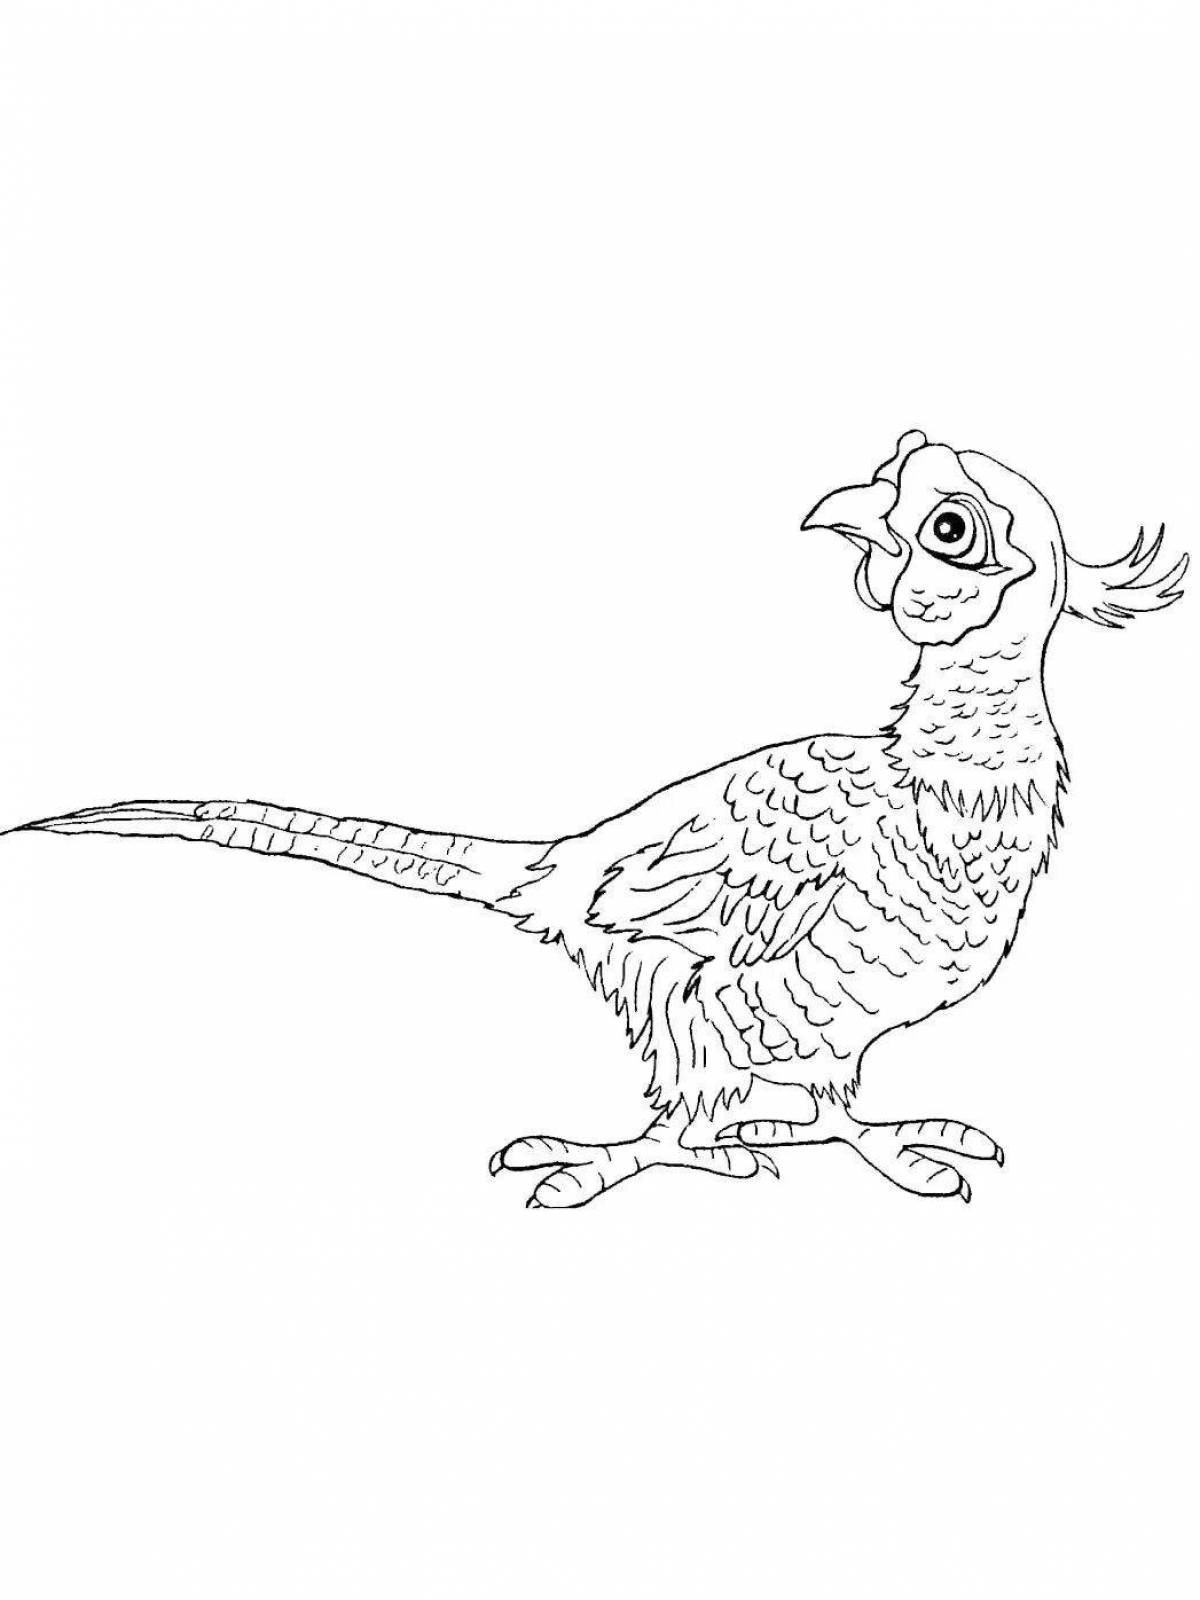 Rampant pheasant coloring page